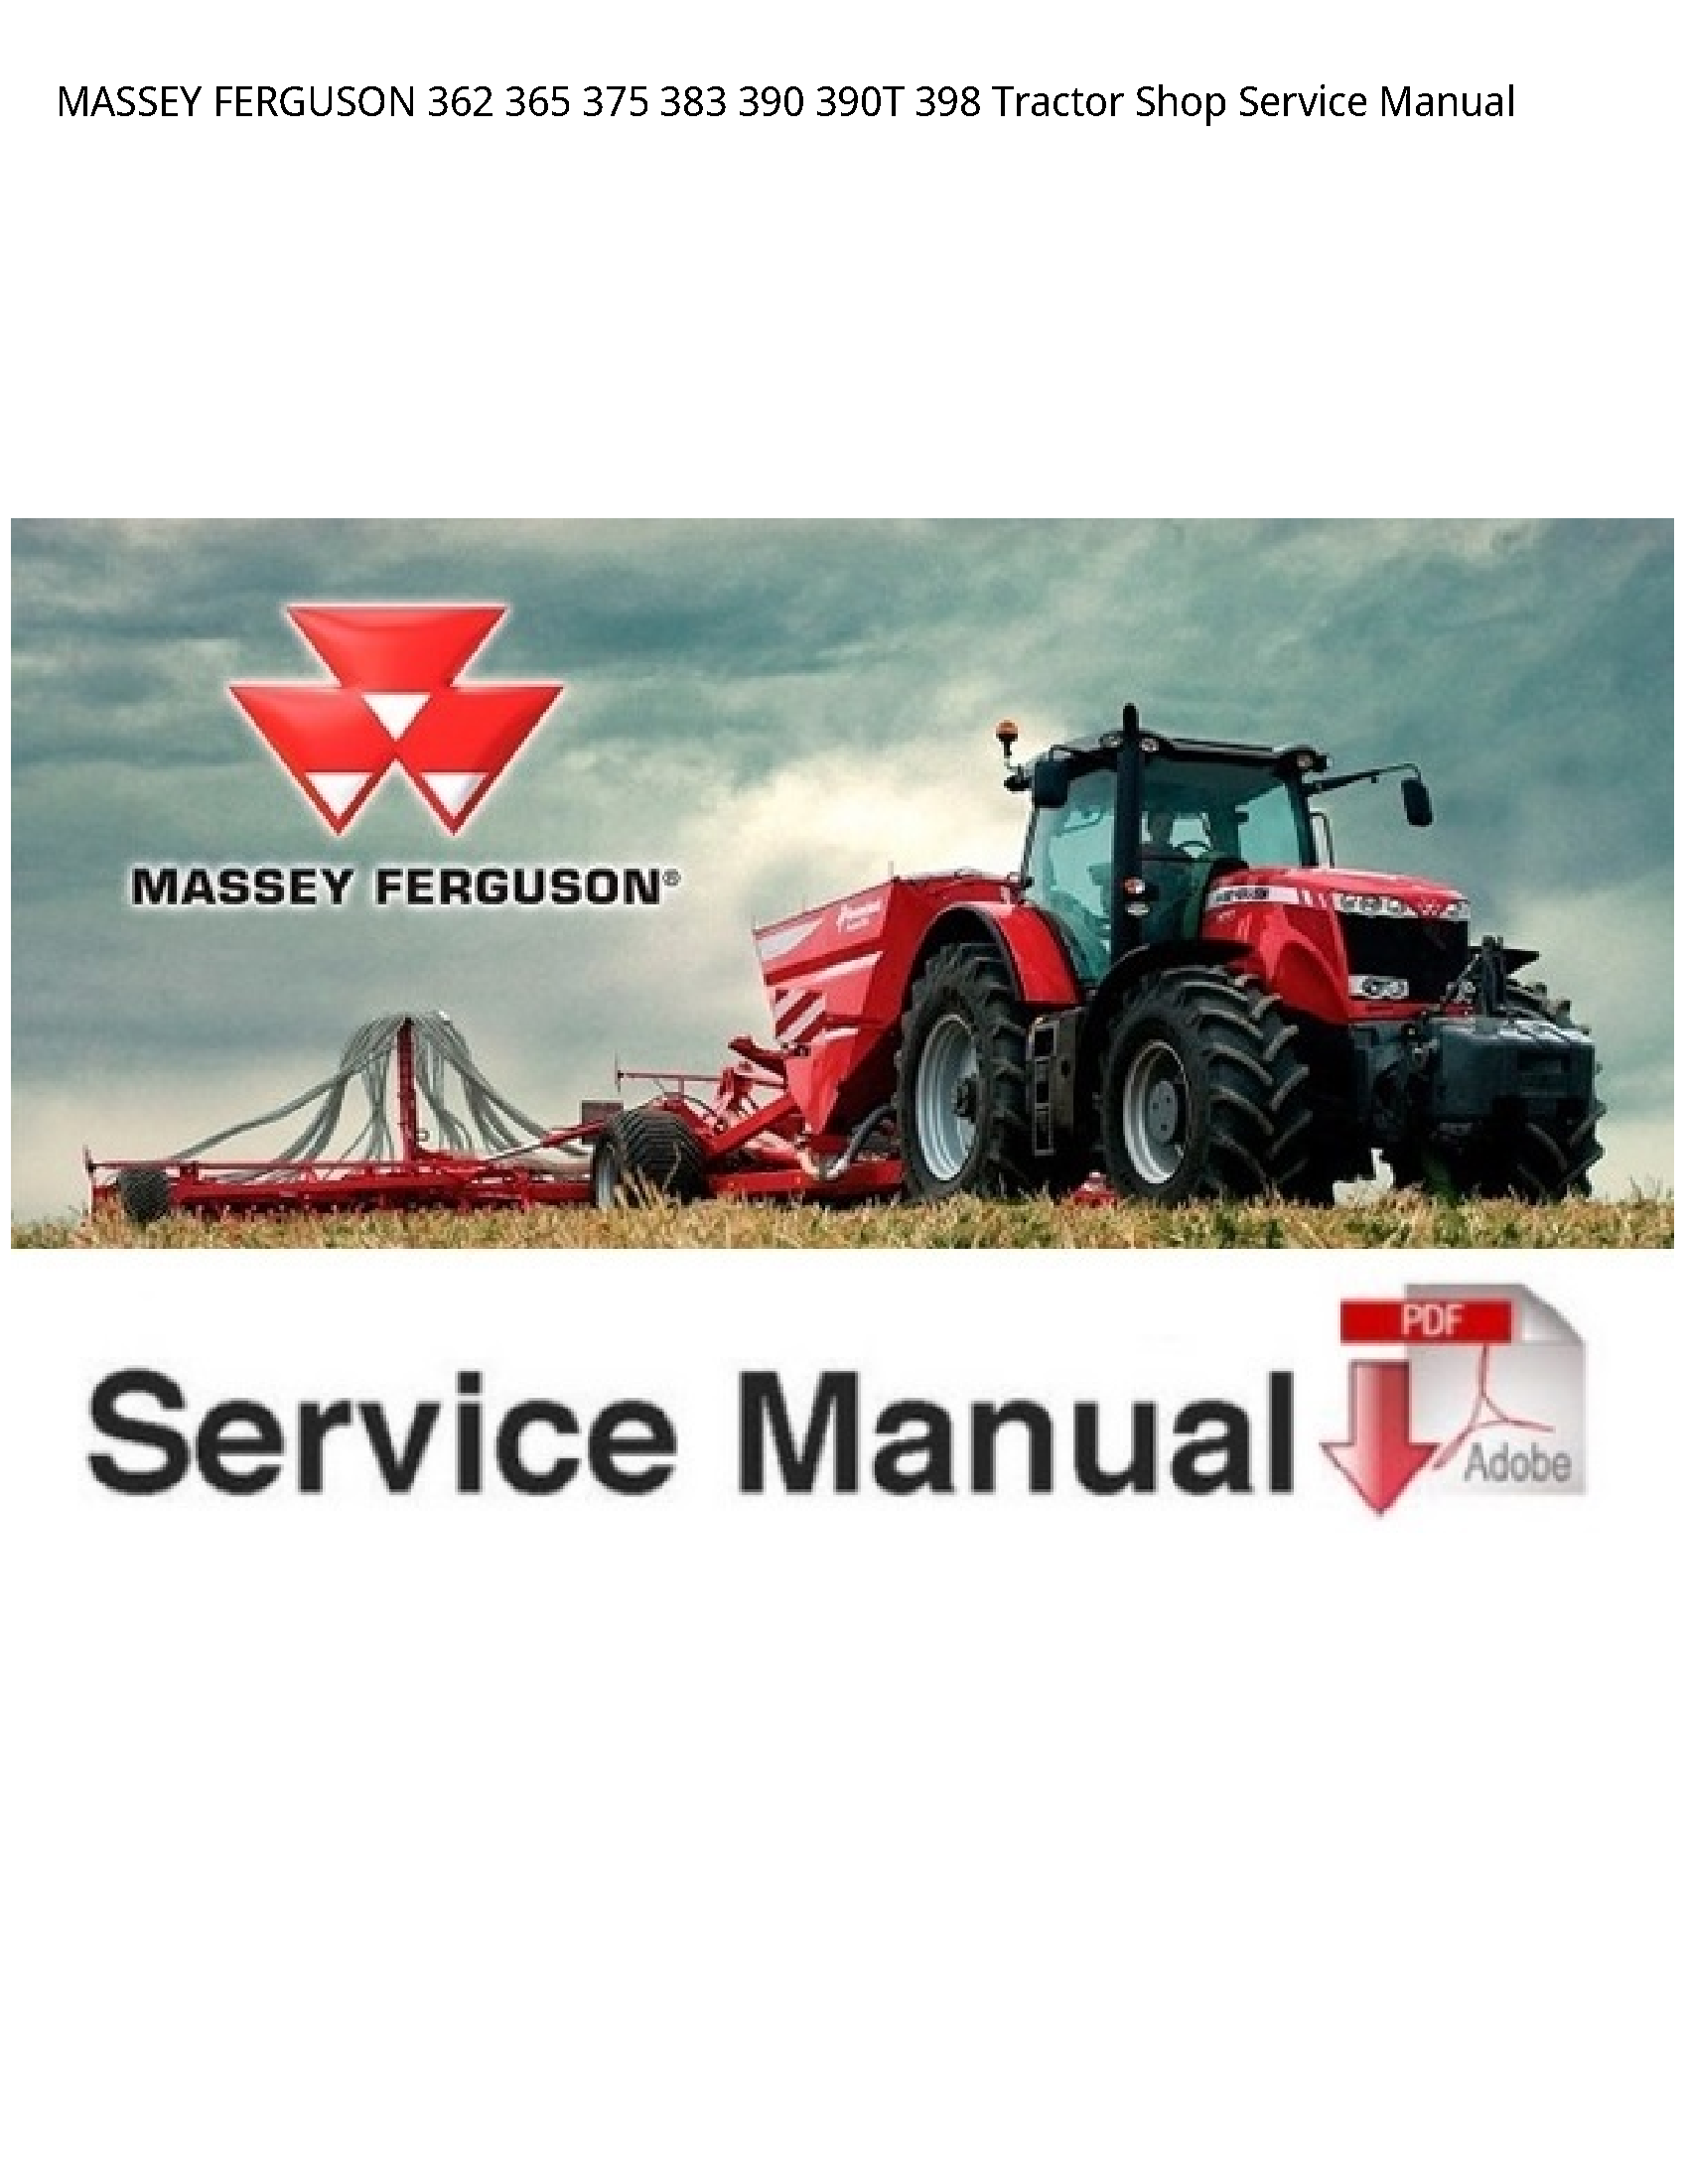 Massey Ferguson 362 Tractor Shop Service manual